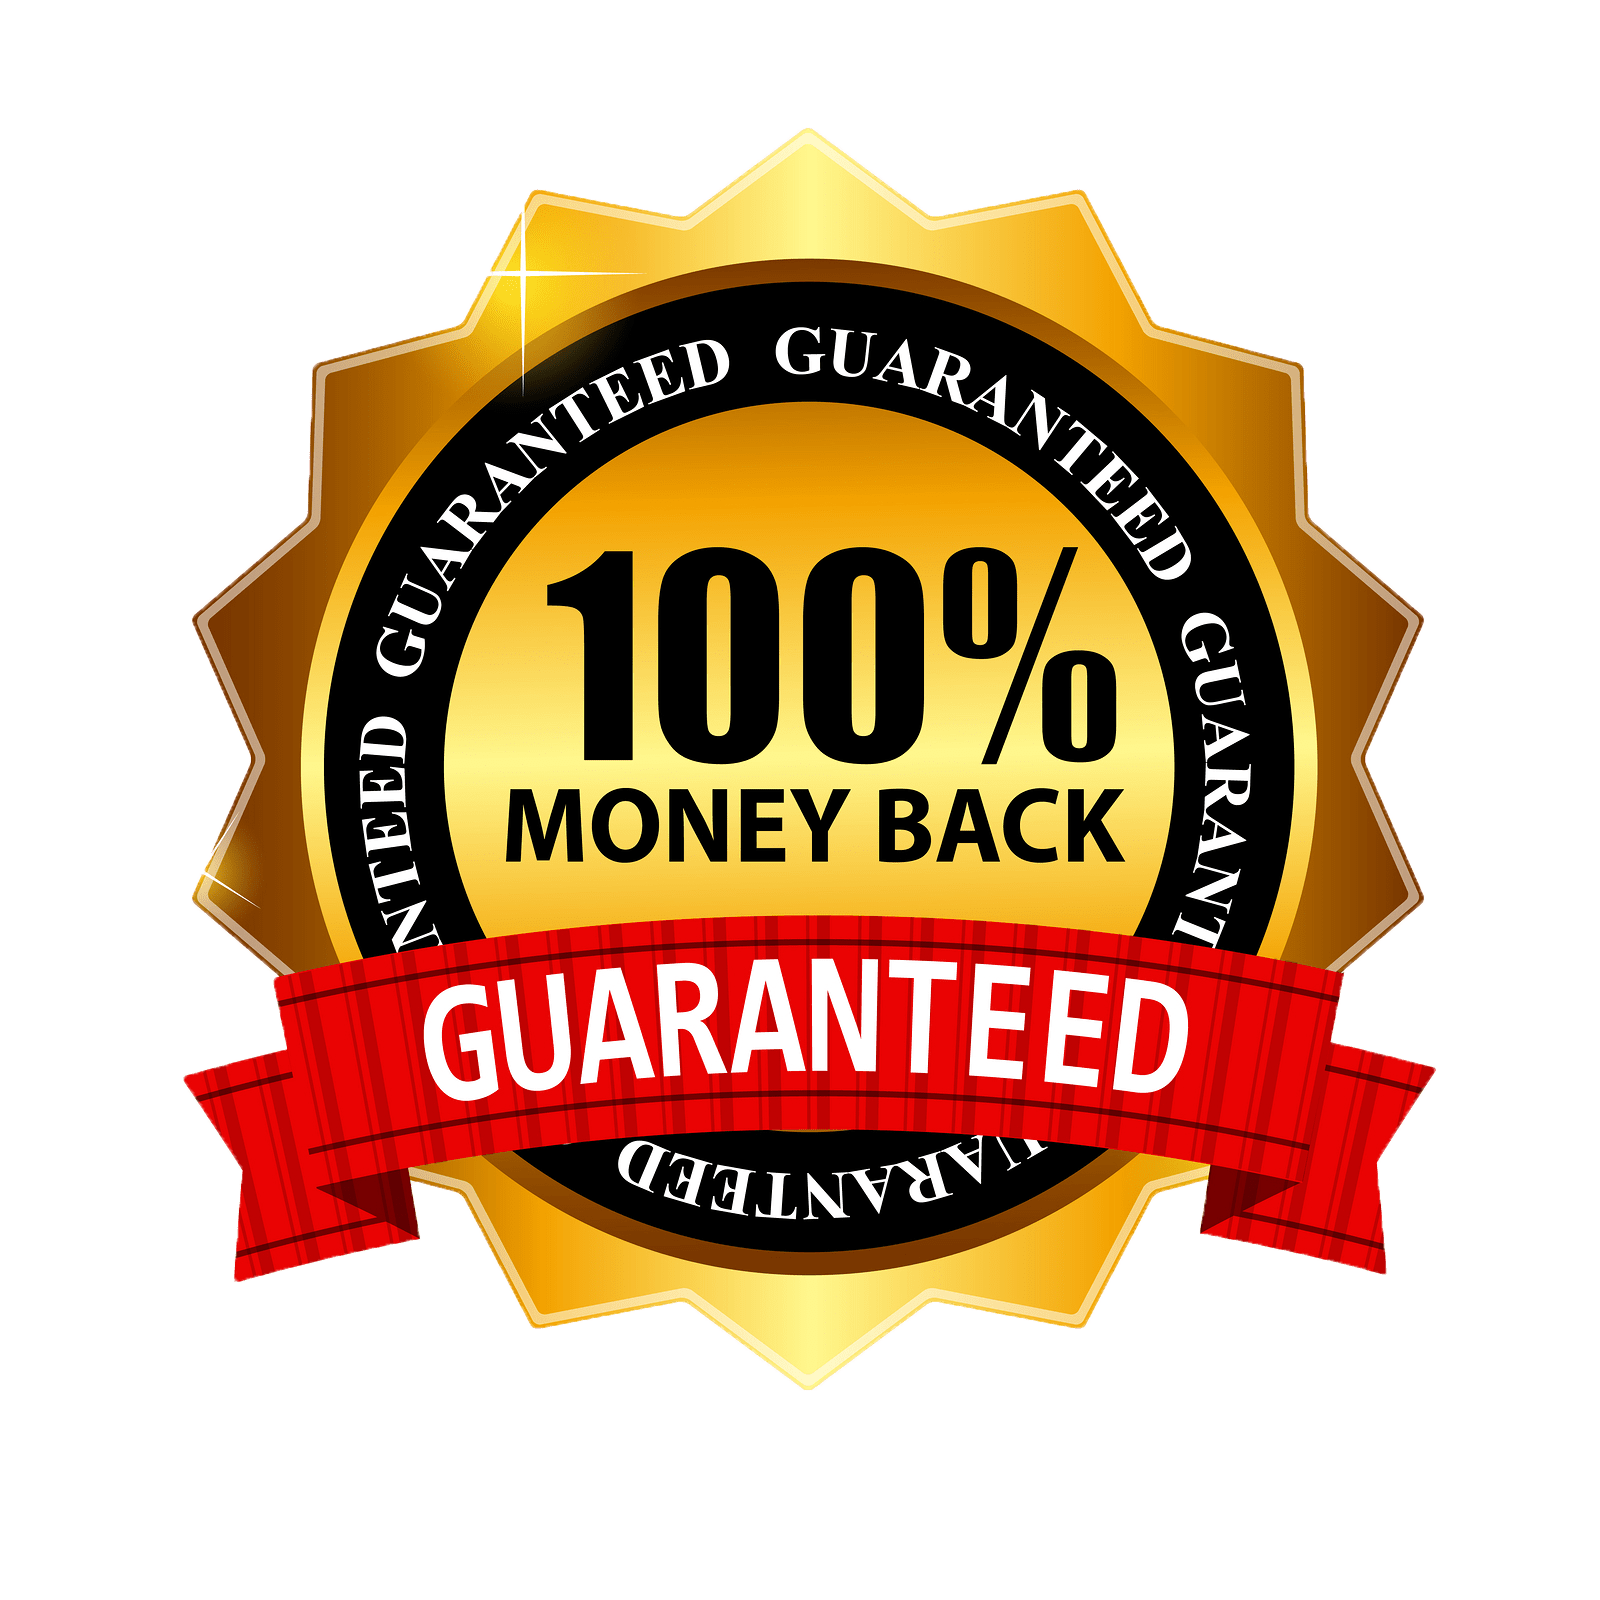 money back guarantee seal